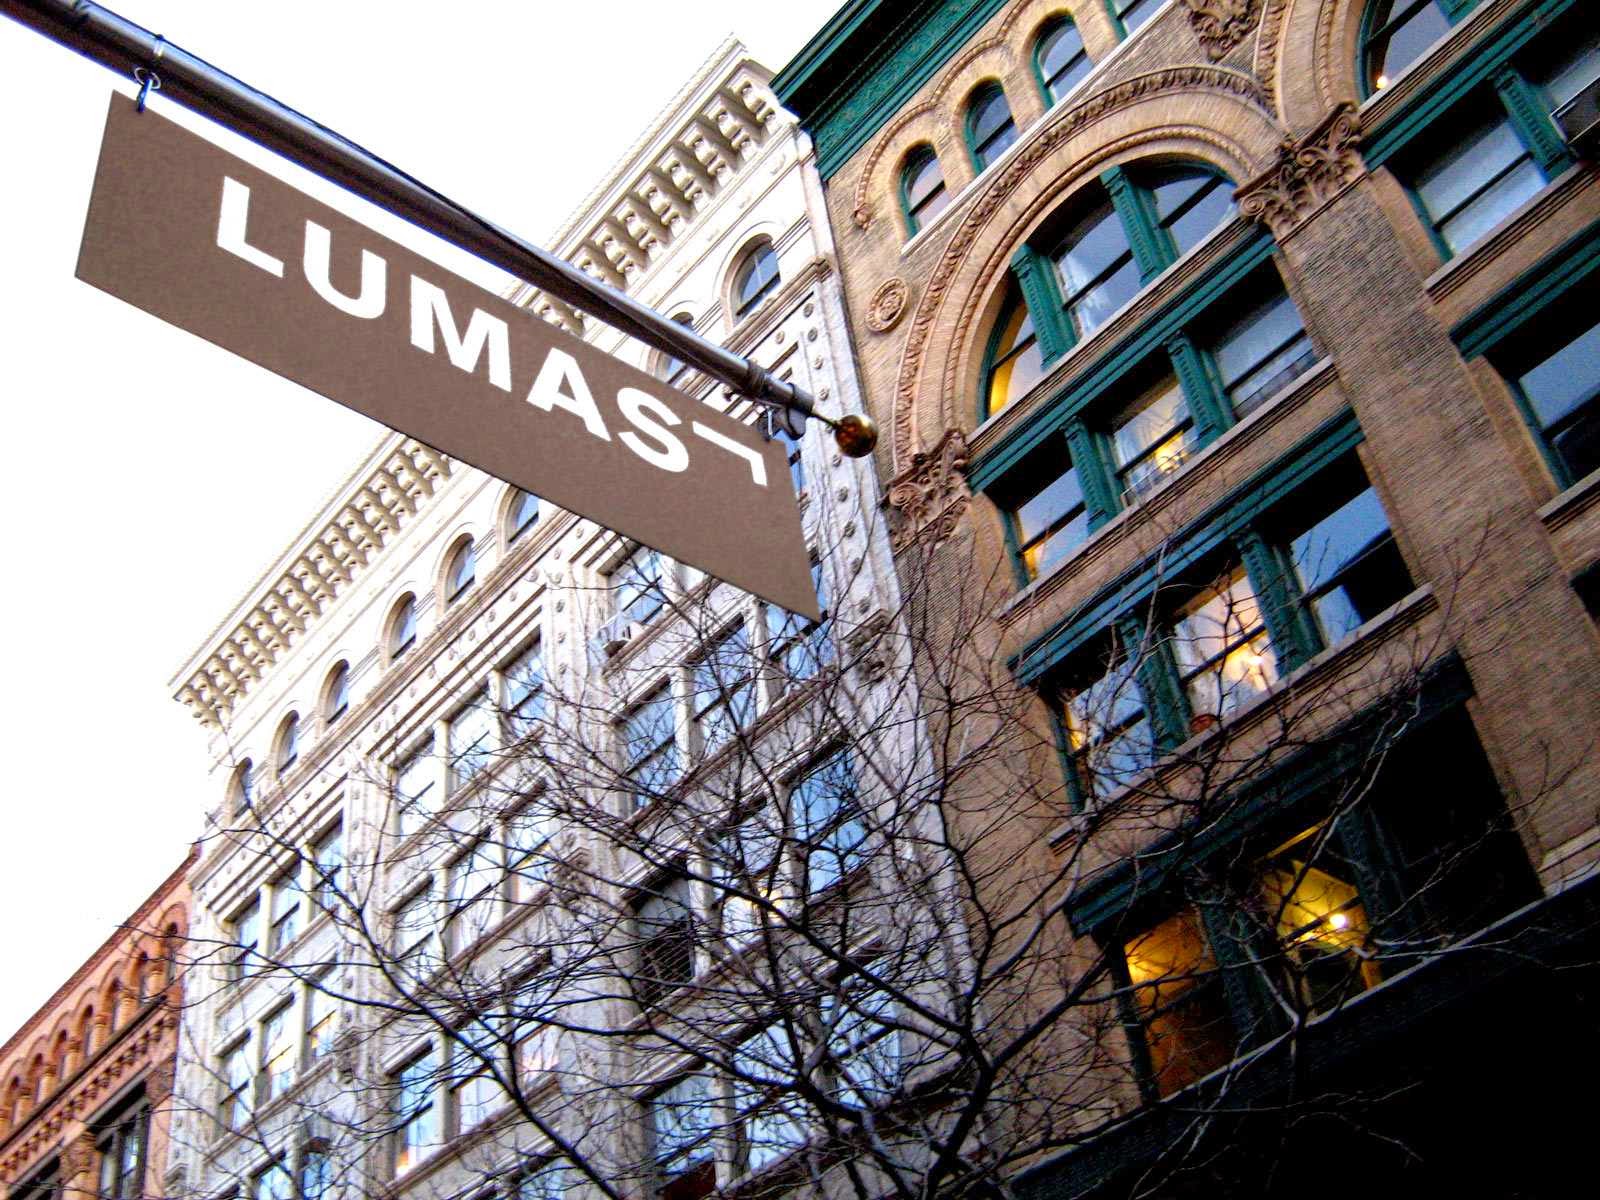 Photo of LUMAS New York - Soho in New York City, New York, United States - 4 Picture of Point of interest, Establishment, Art gallery